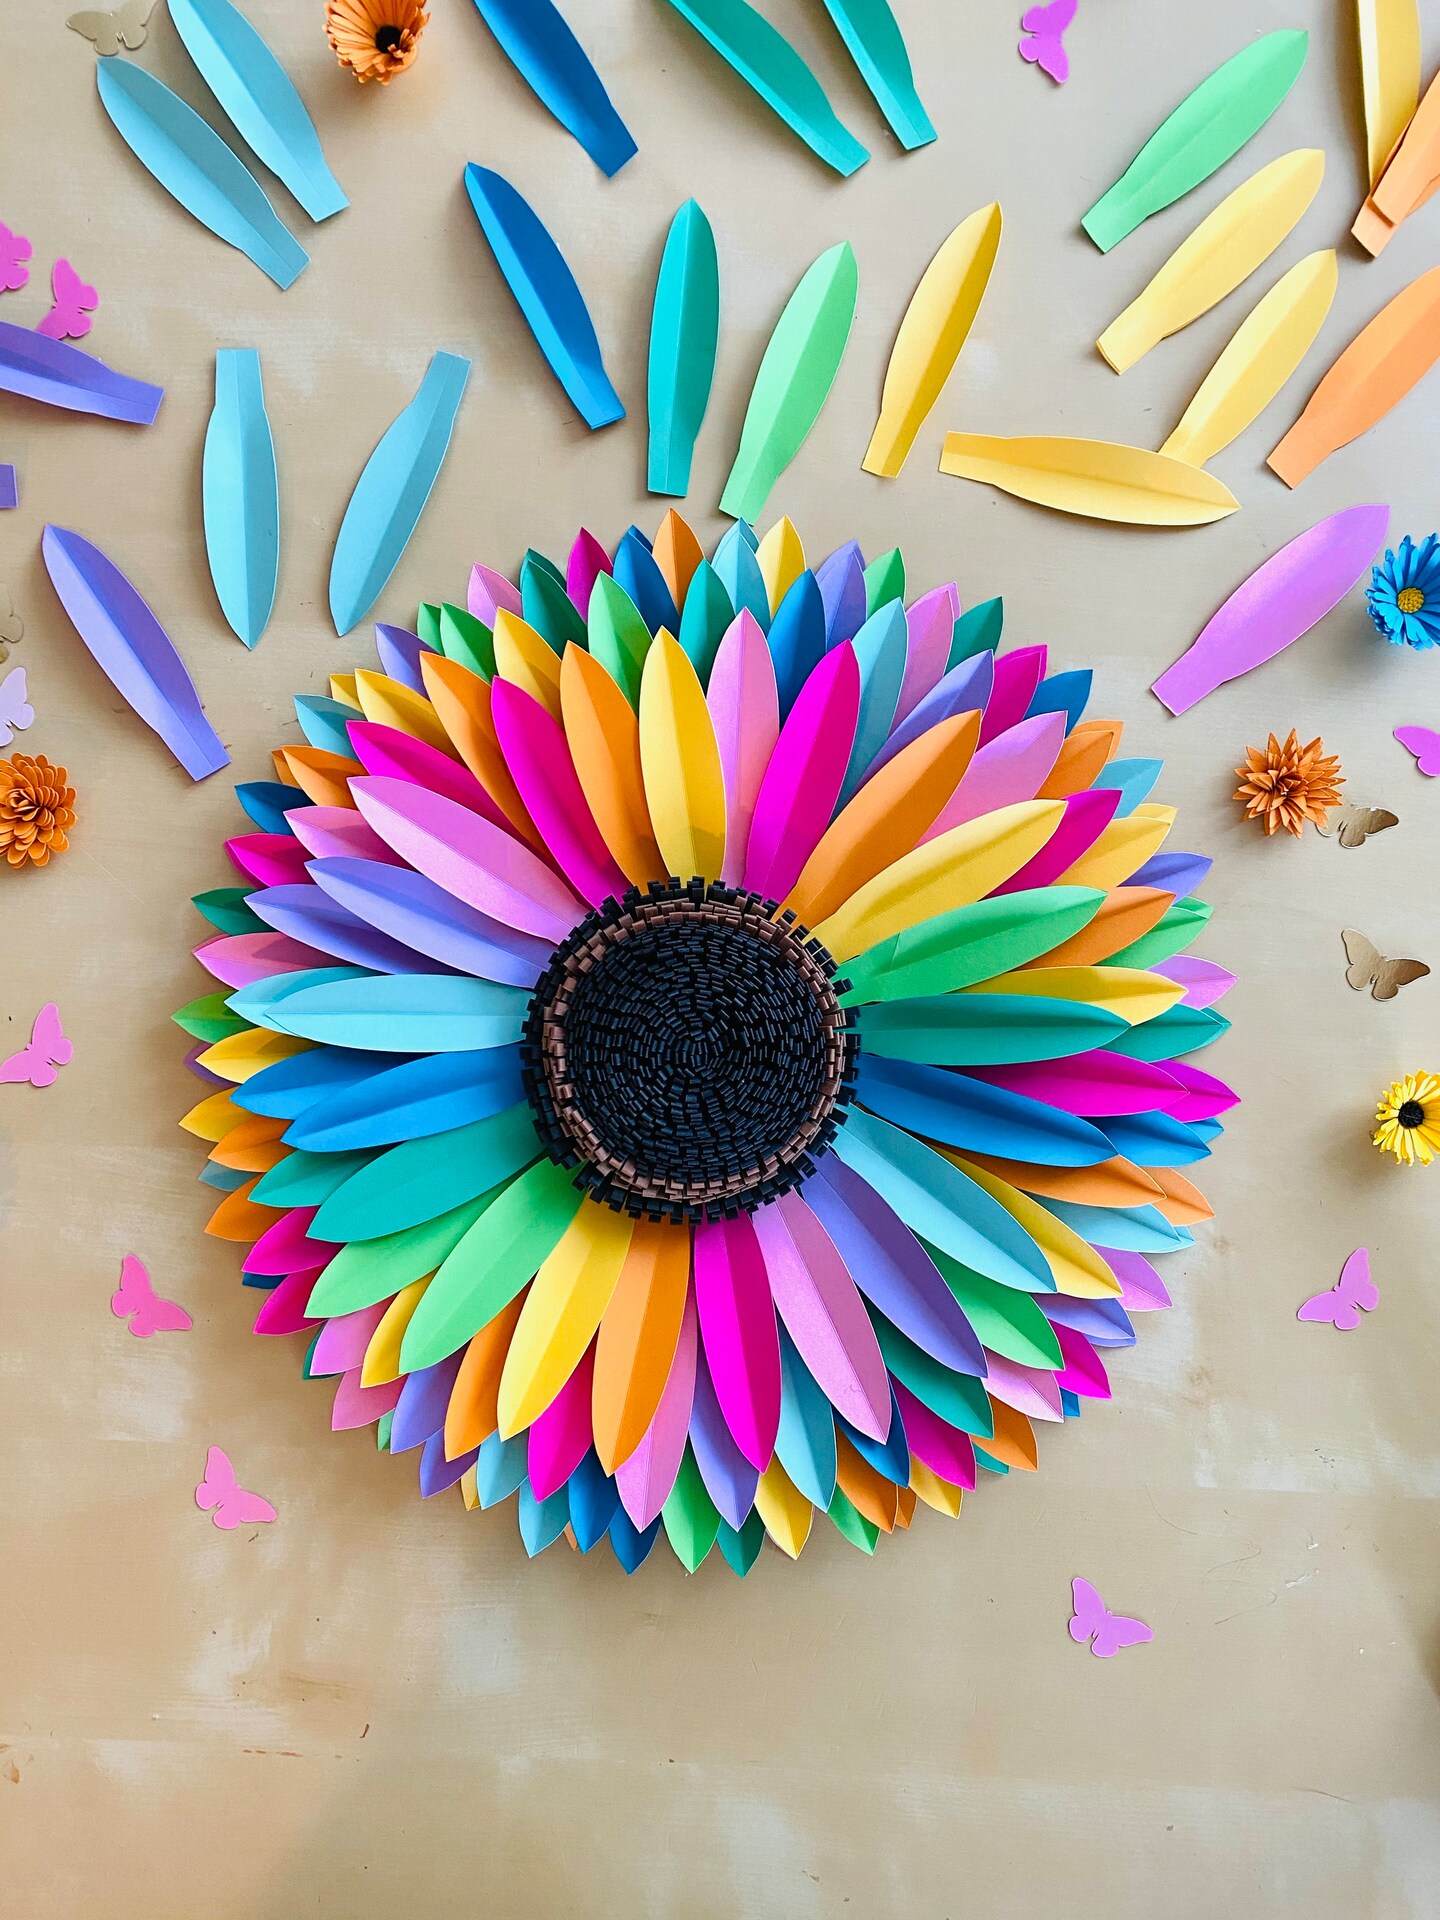 Paper Sunflower Craft for Kids